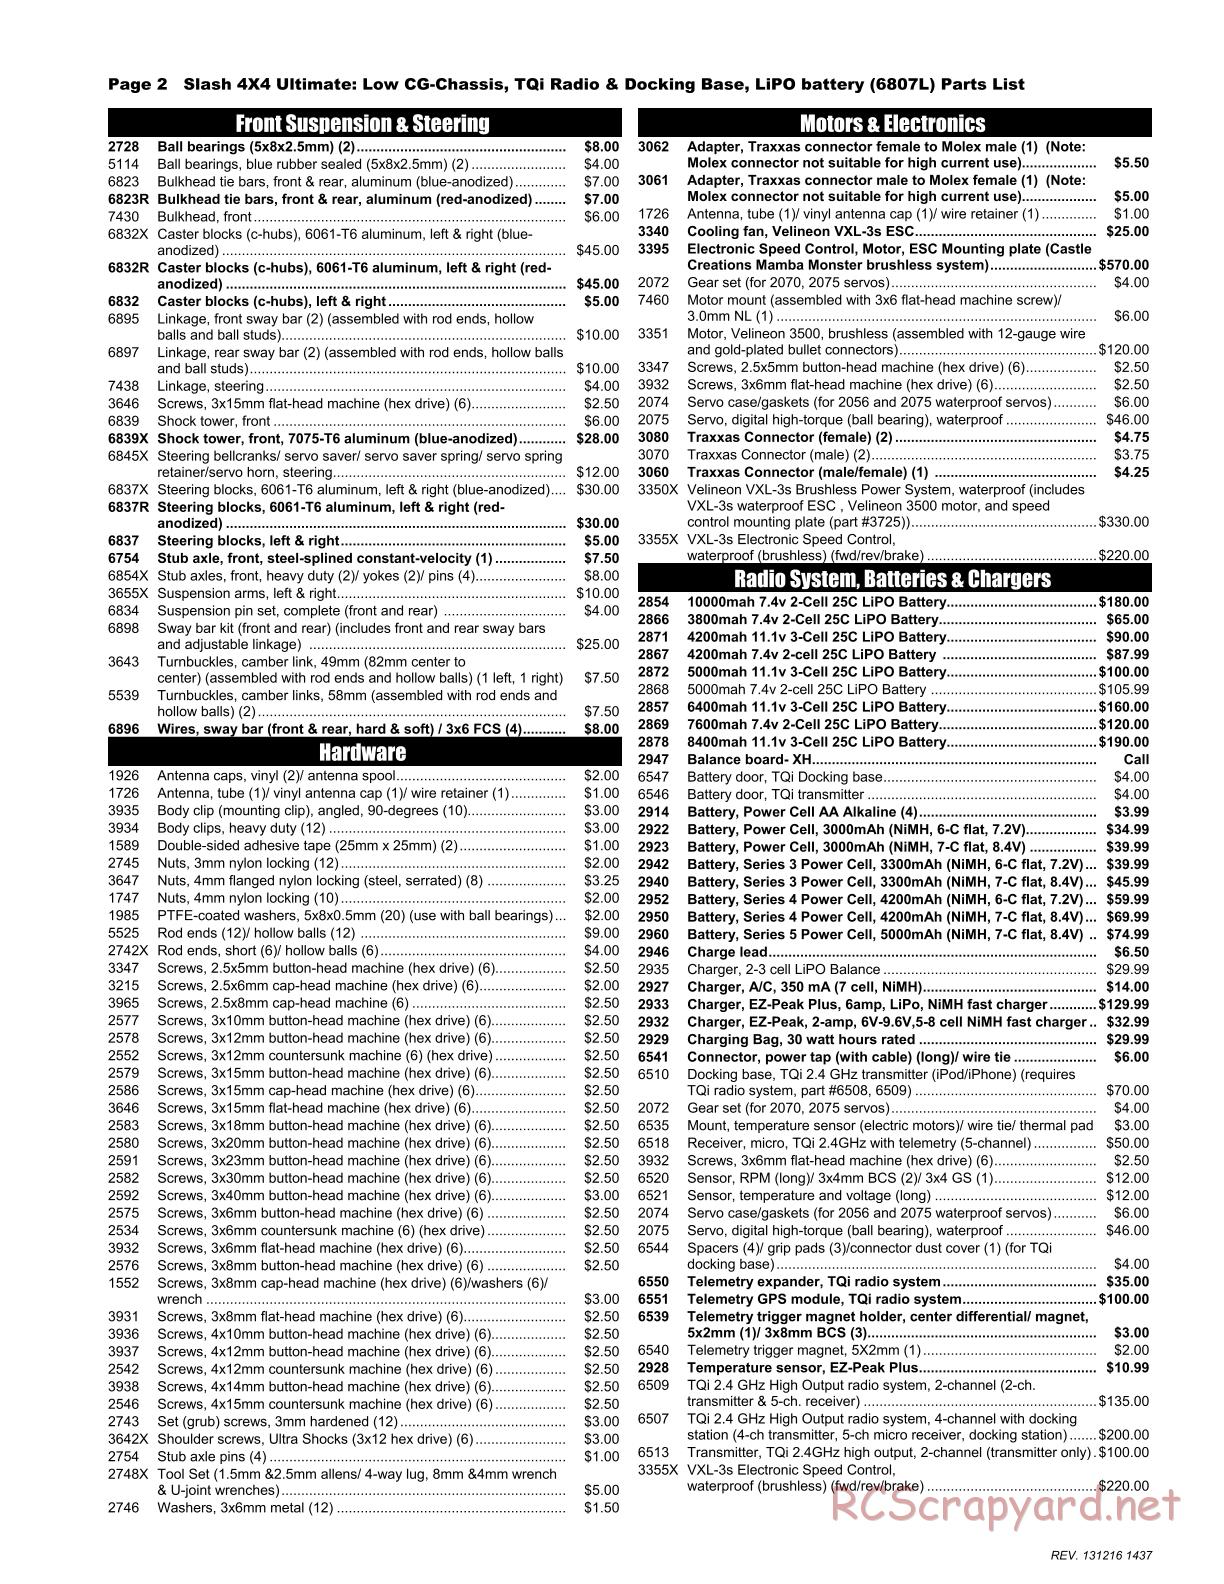 Traxxas - Slash 4x4 Ultimate LiPo (2012) - Parts List - Page 2